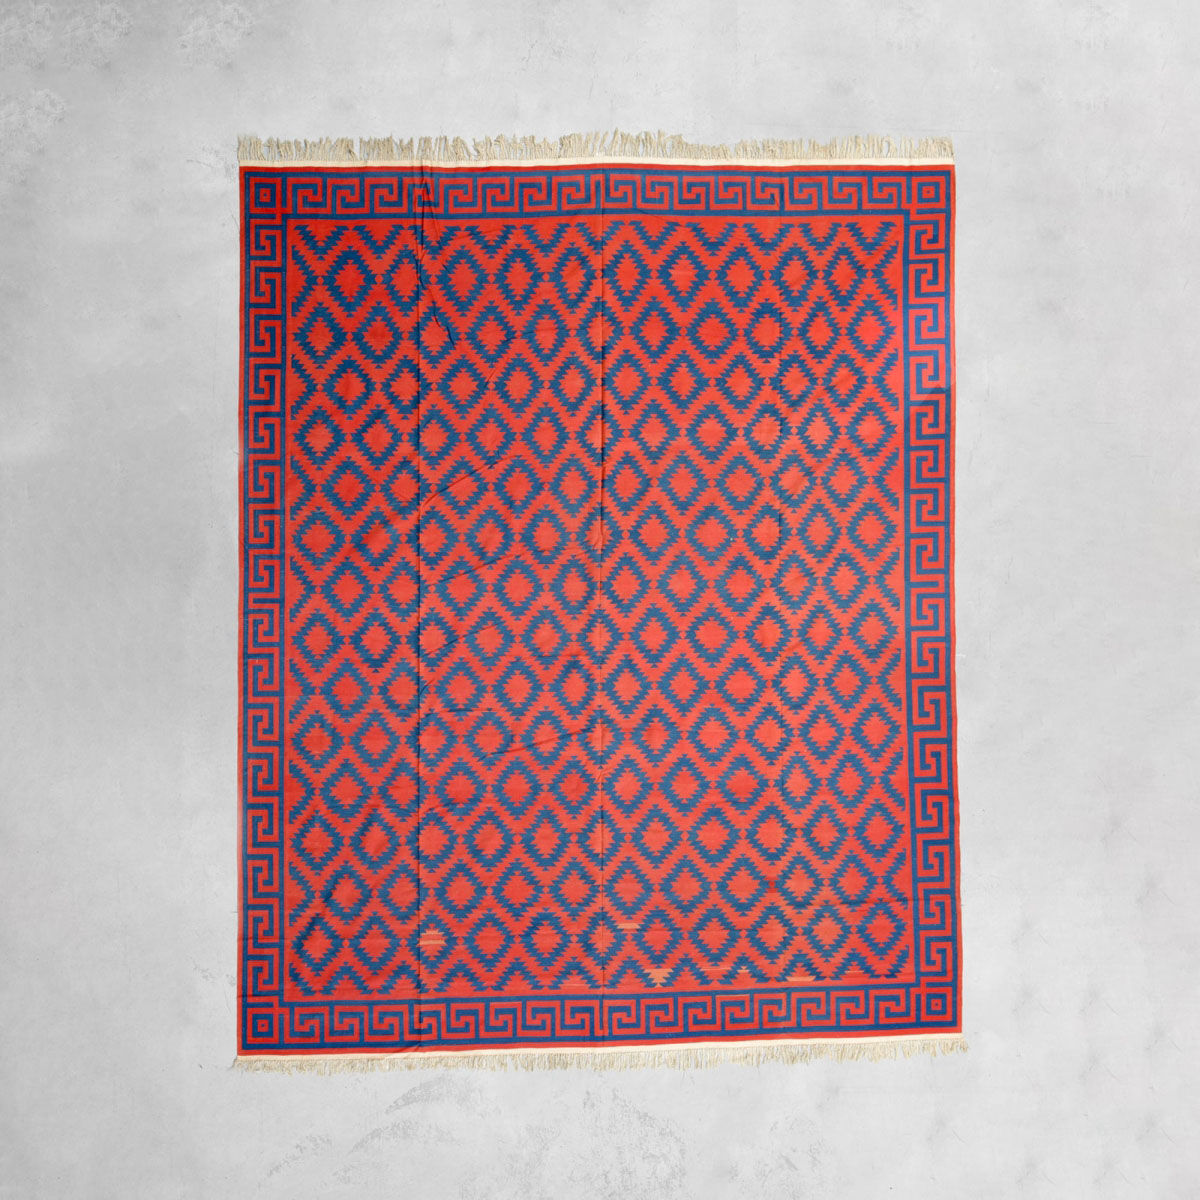  Tappeto Dhurrie | 486 x 456 cm Antique carpet - India  pic-1